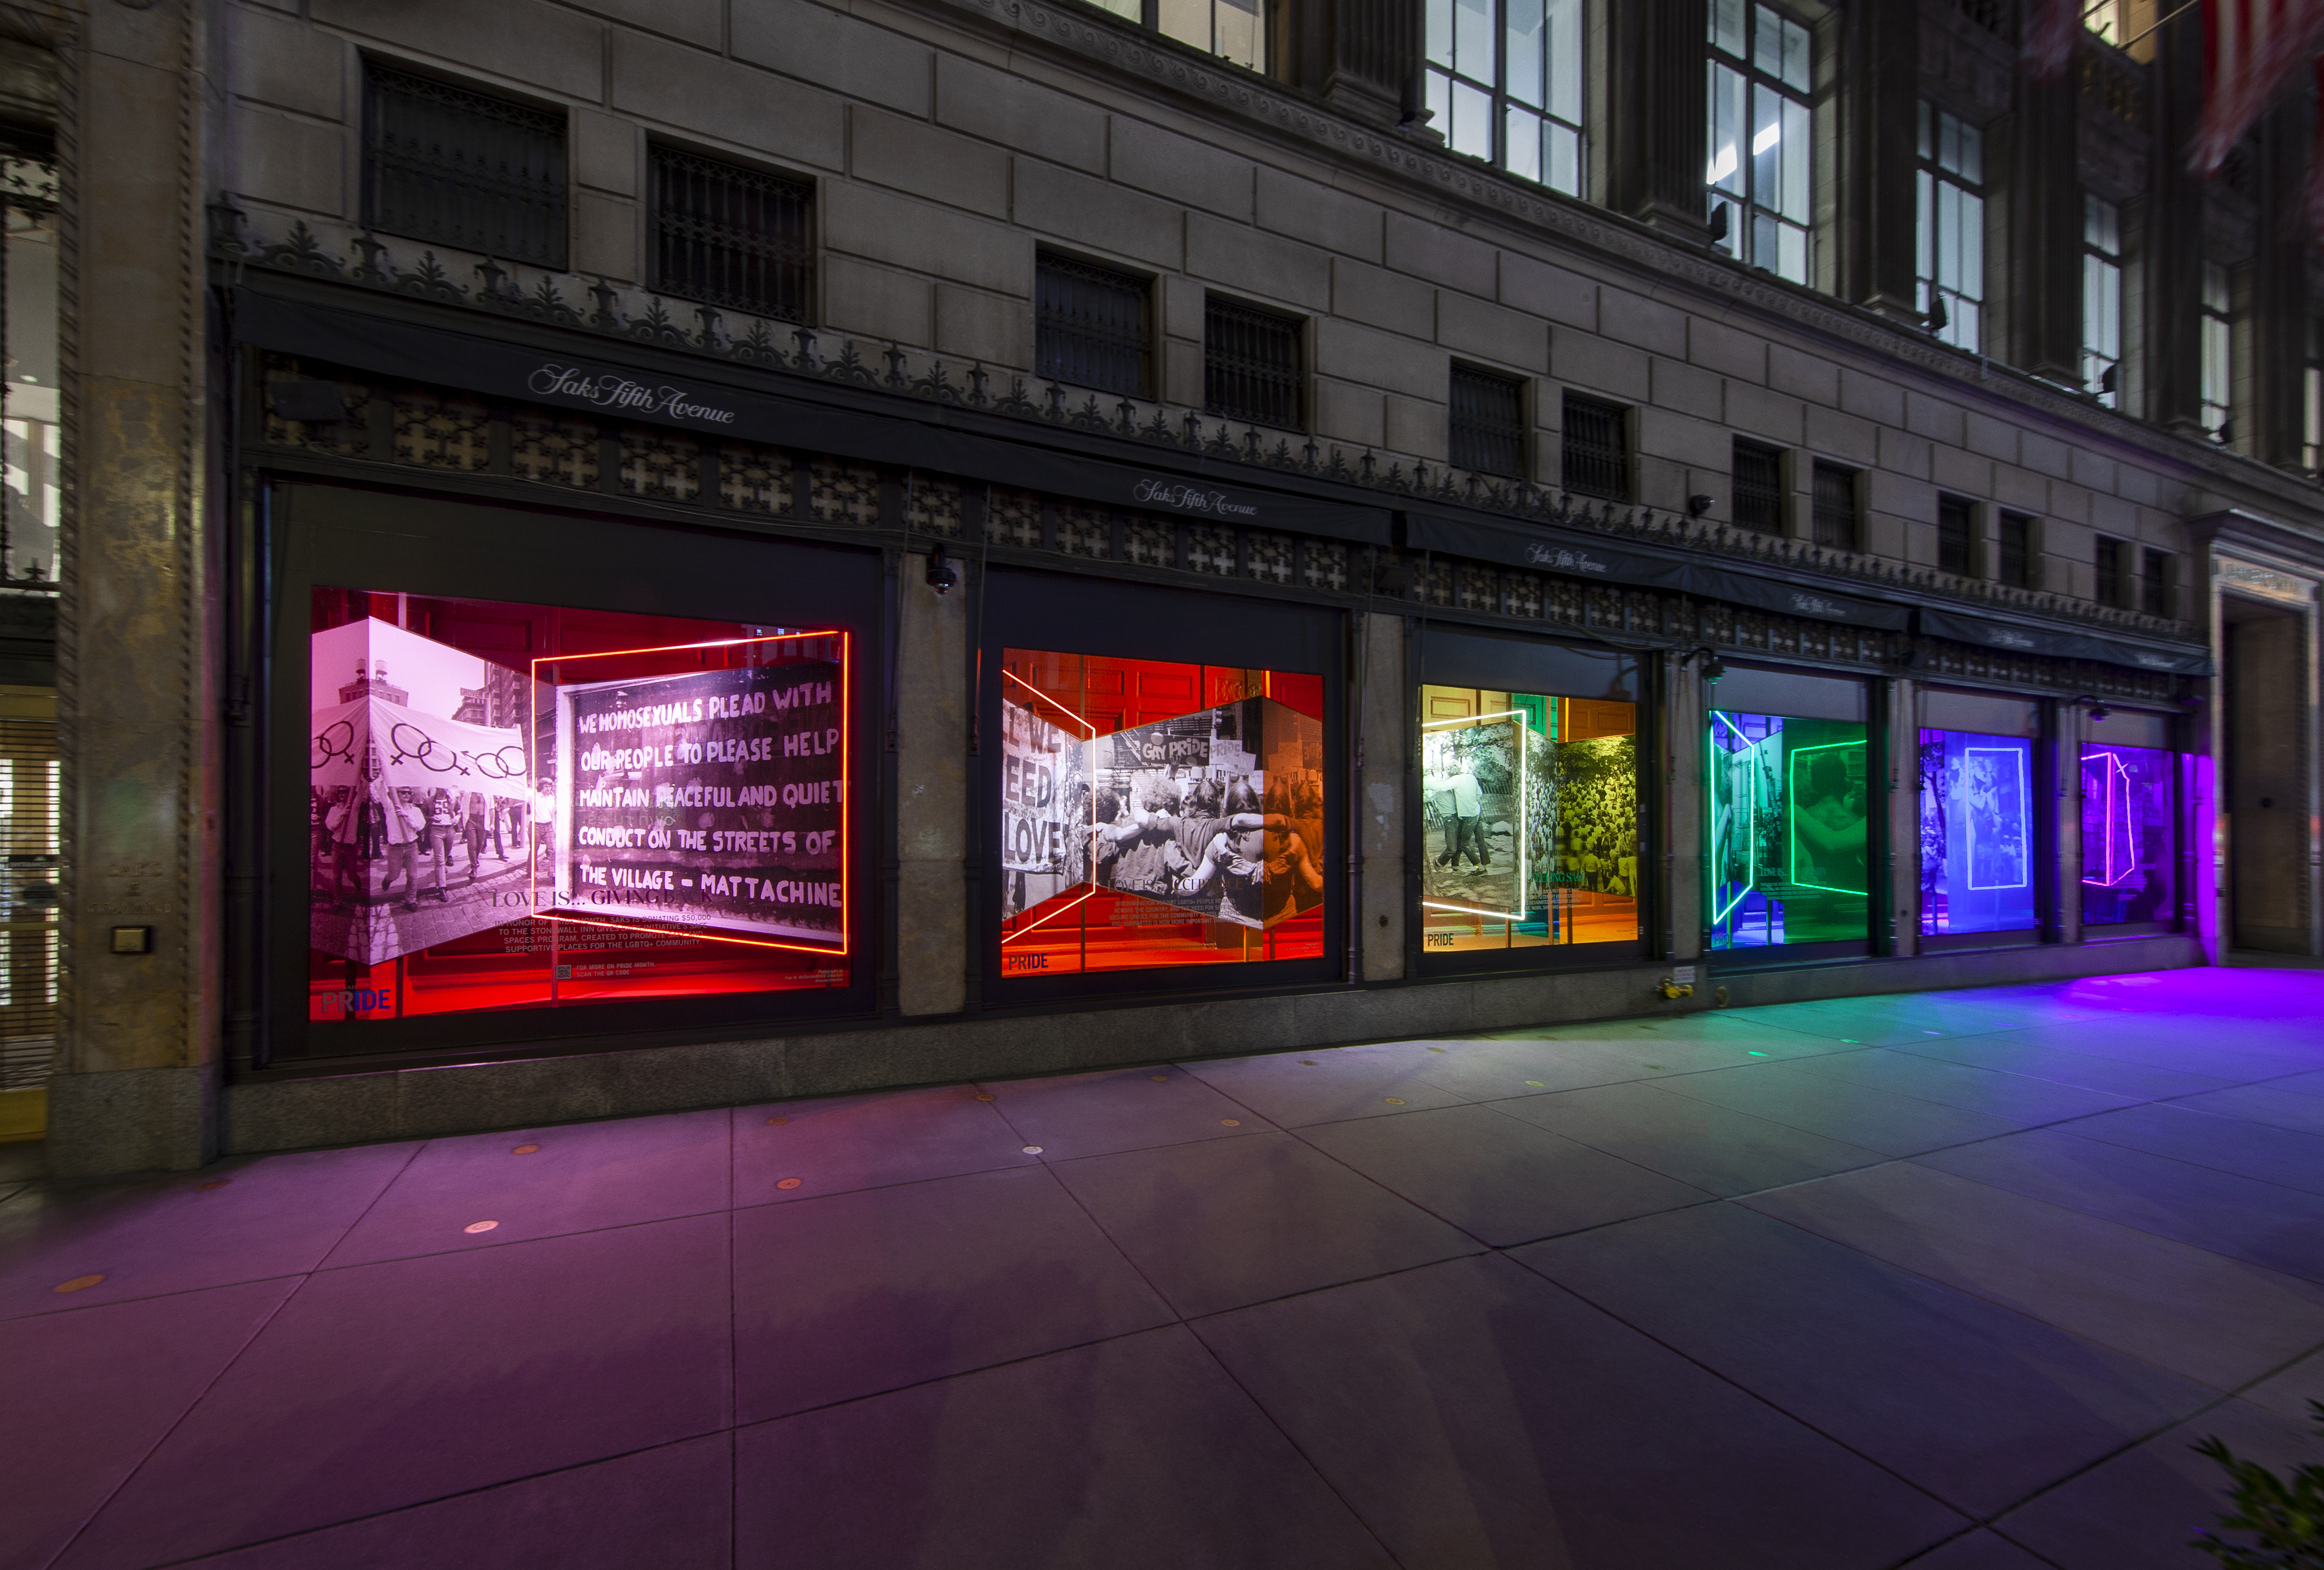 Saks Fifth Avenue Pride Windows Display